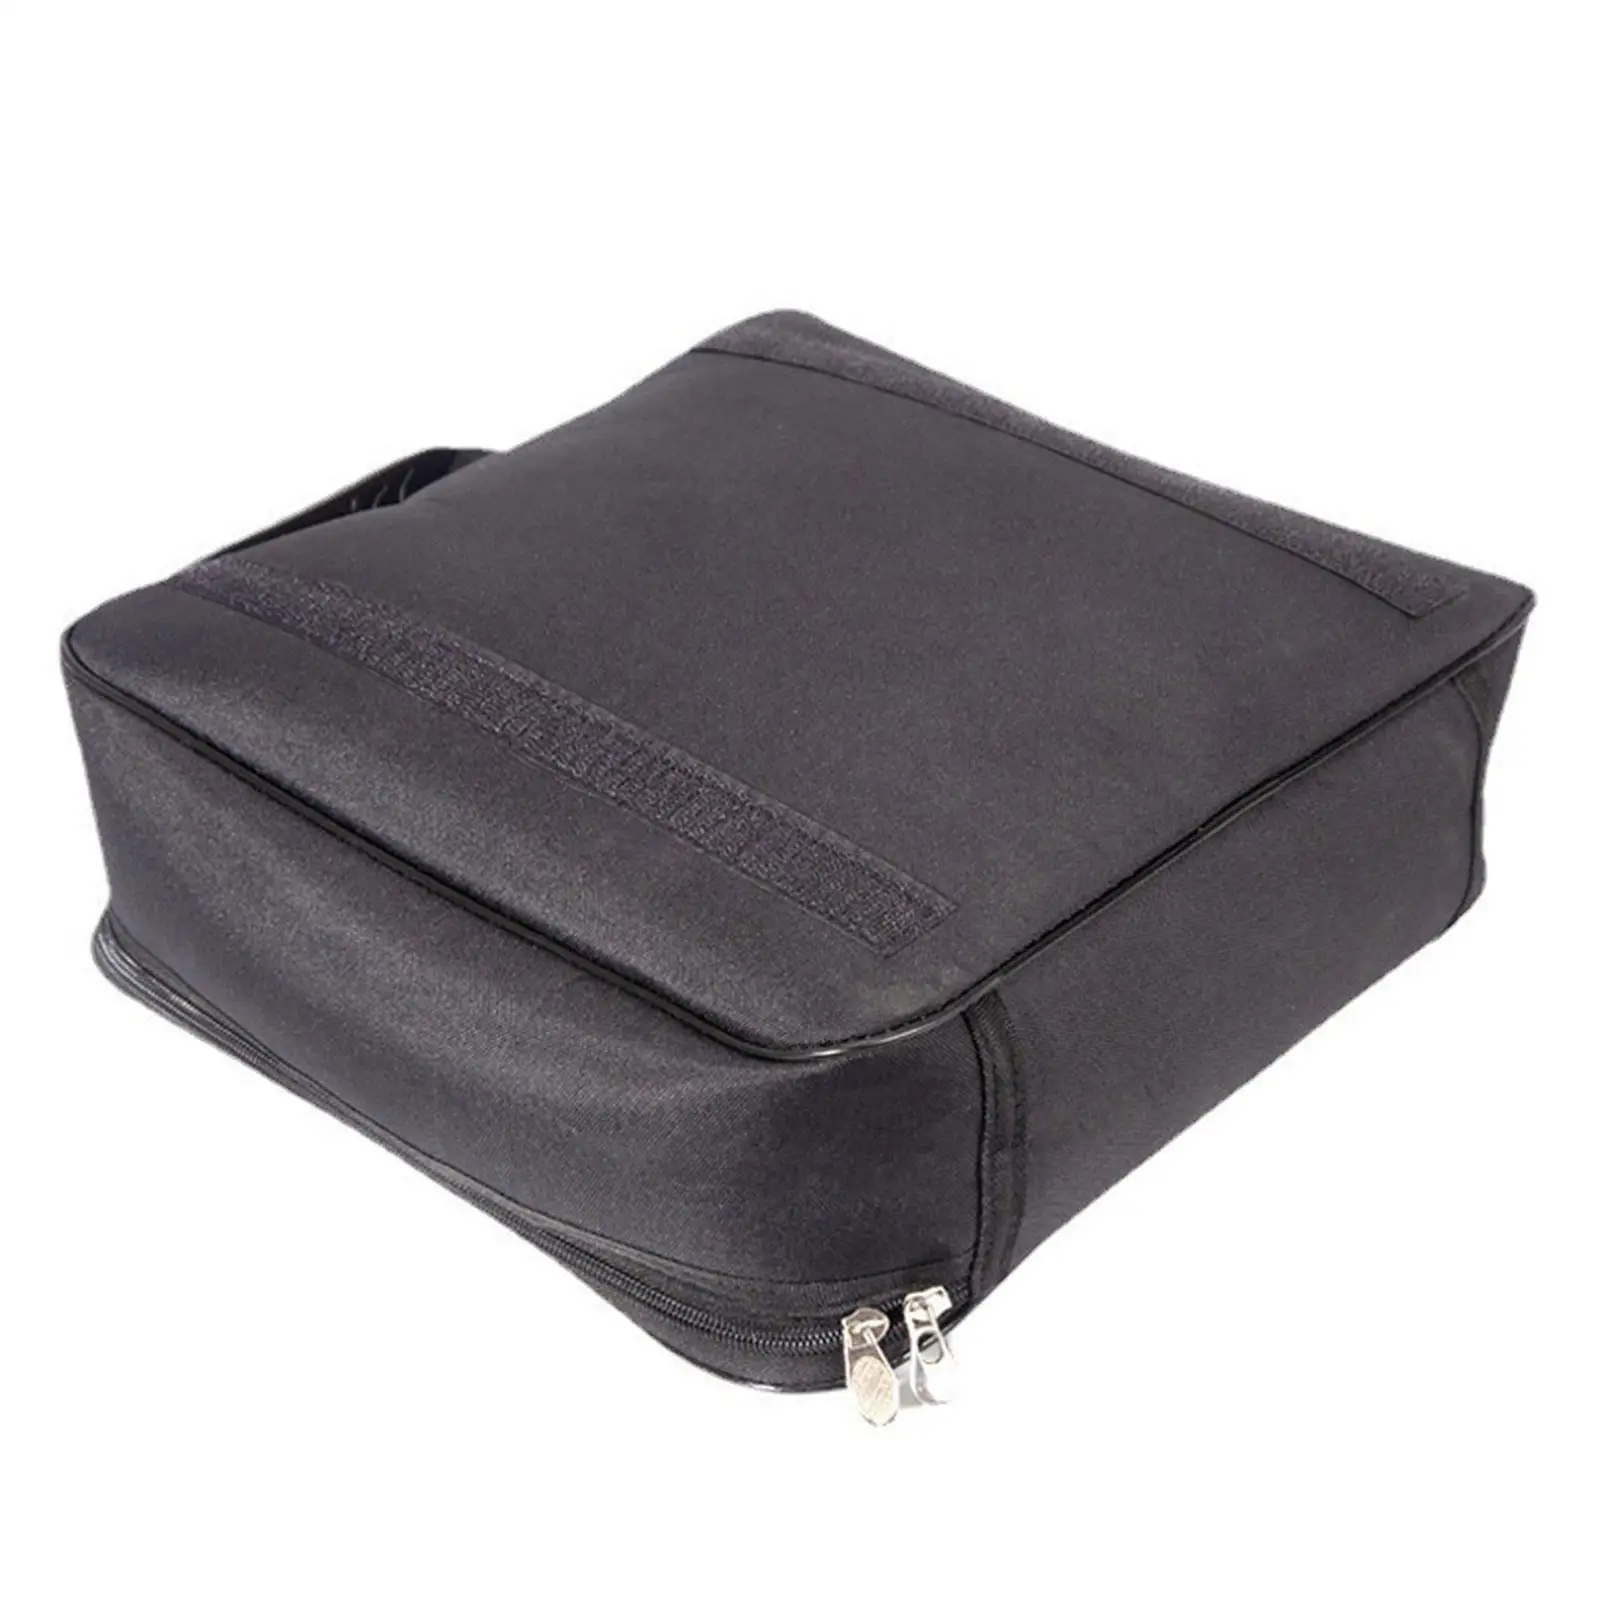 Waterproof EV Cables Bag EV Cable Storage Bag Oxford Cloth Portable Wear Resistant Cable Bag for Cable Cords Hoses